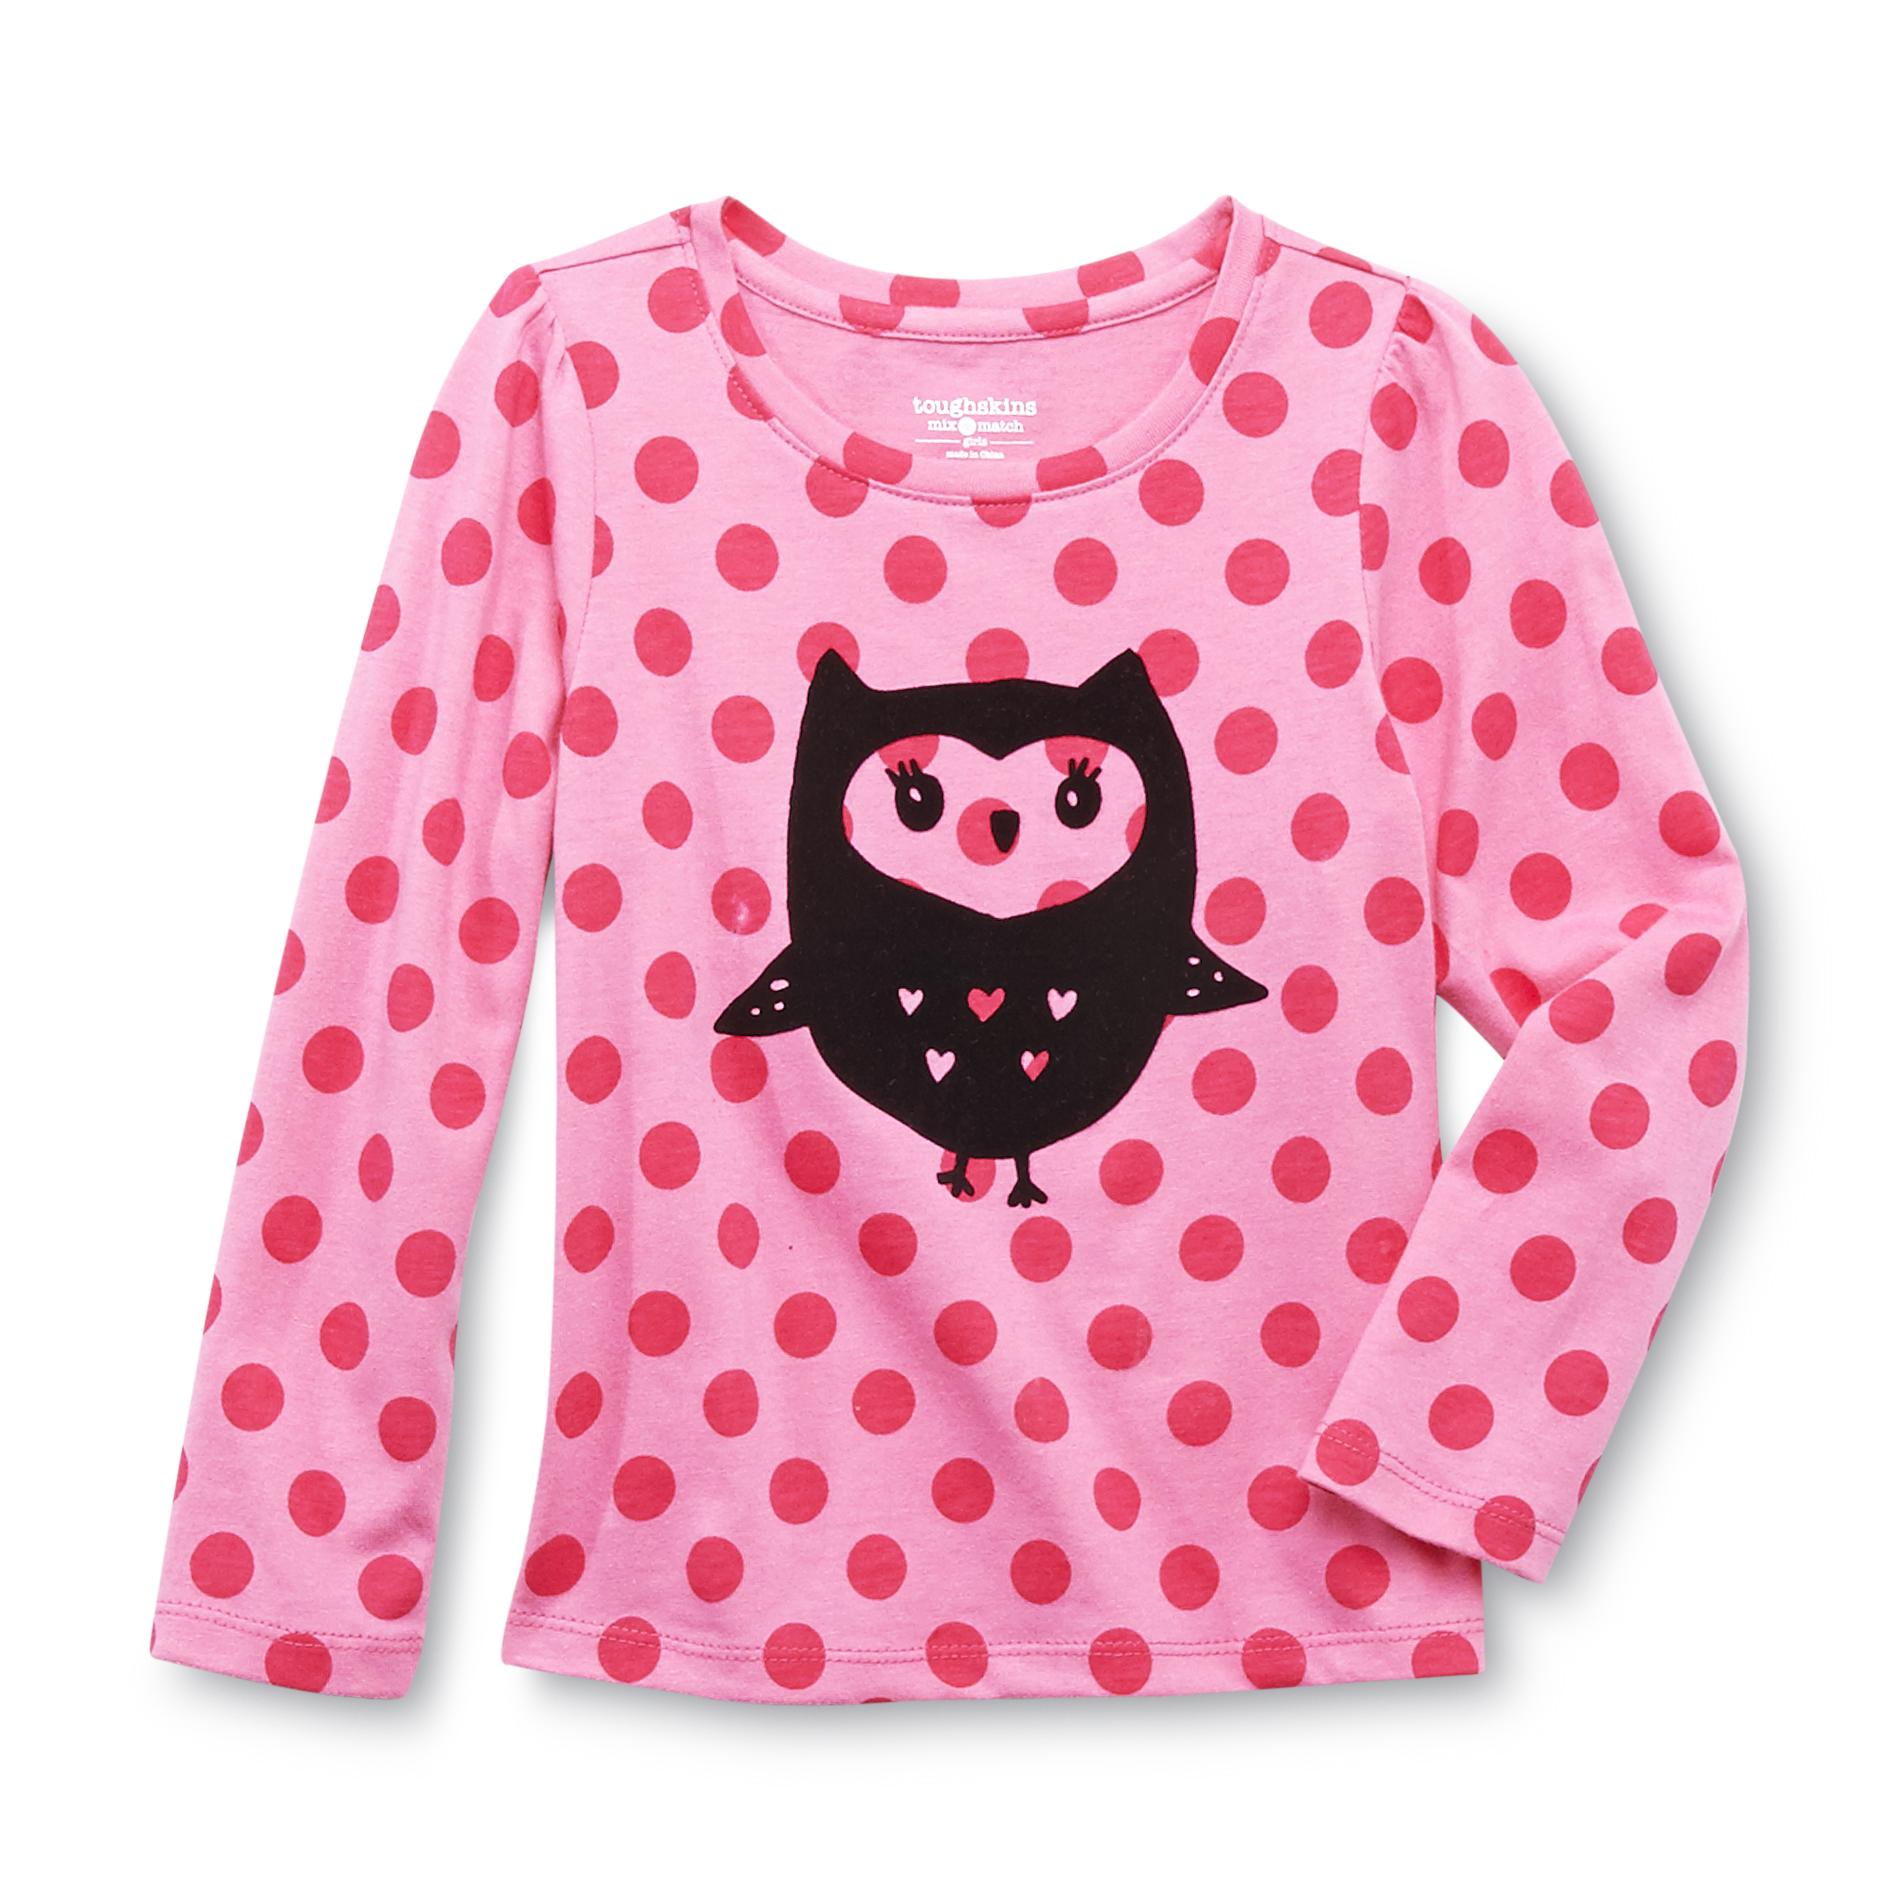 Toughskins Infant & Toddler Girl's Long-Sleeve Graphic T-Shirt - Owl